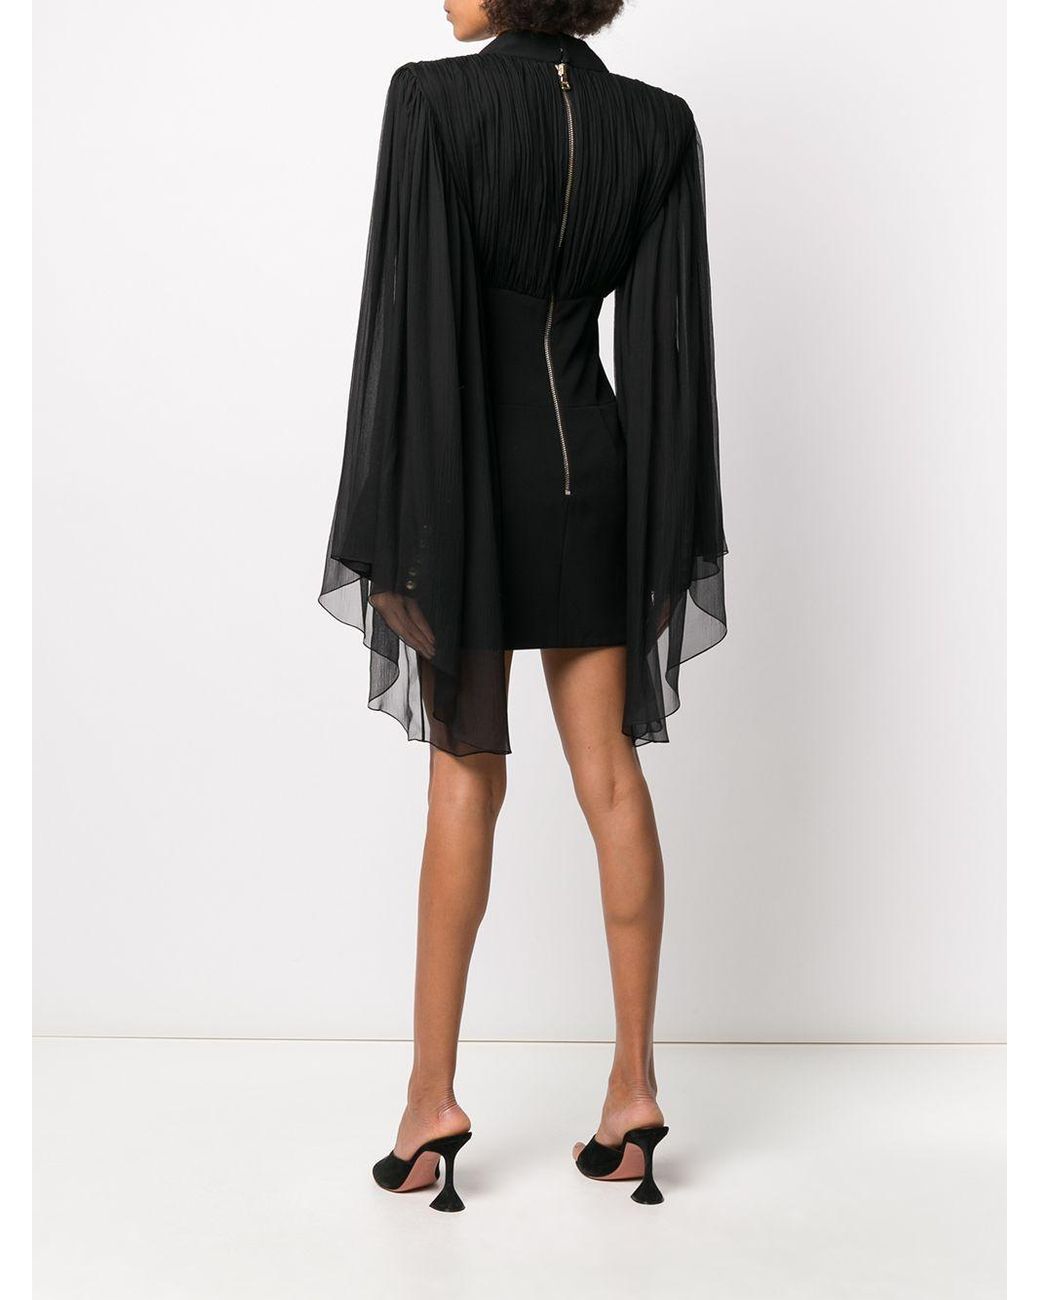 Balmain Silk Sheer Sleeved Blazer Dress in Black | Lyst